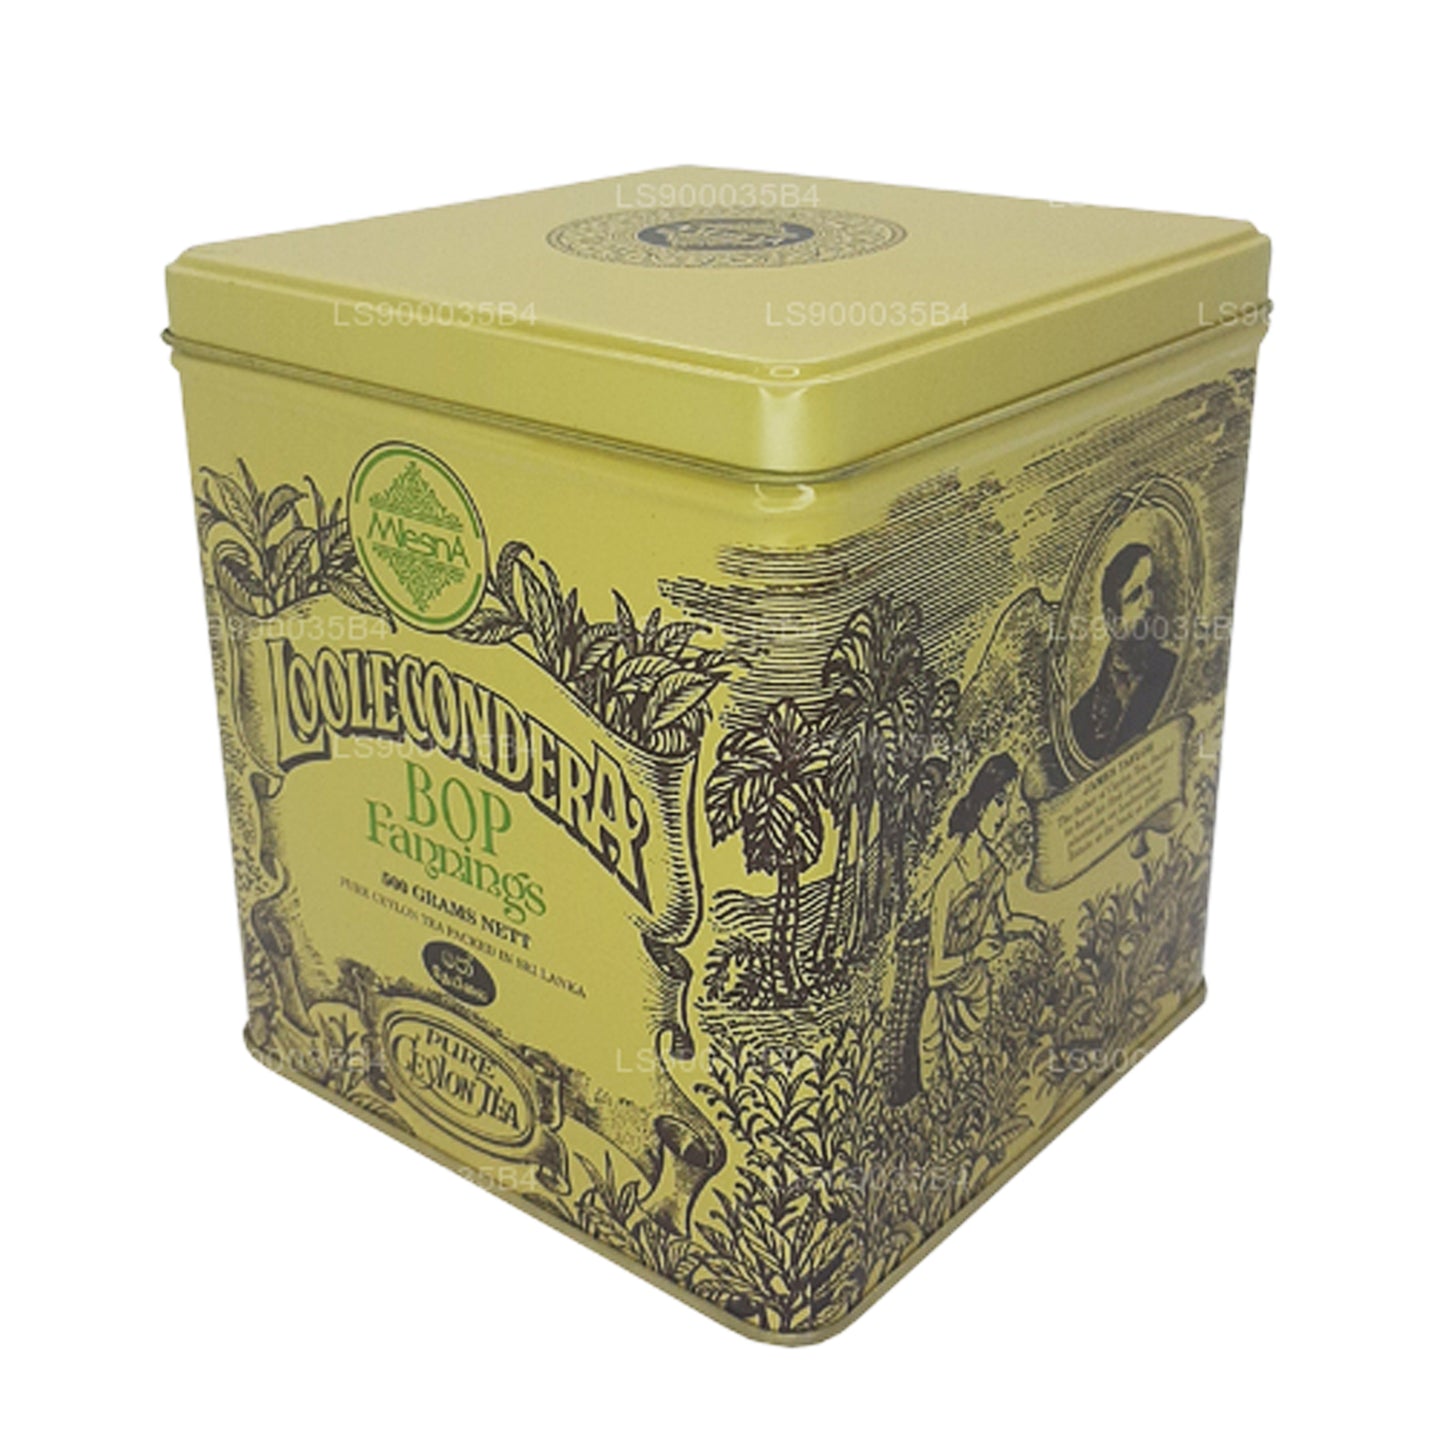 Mlesna Loolecondera Tee in BOPF-Qualität (500 g)